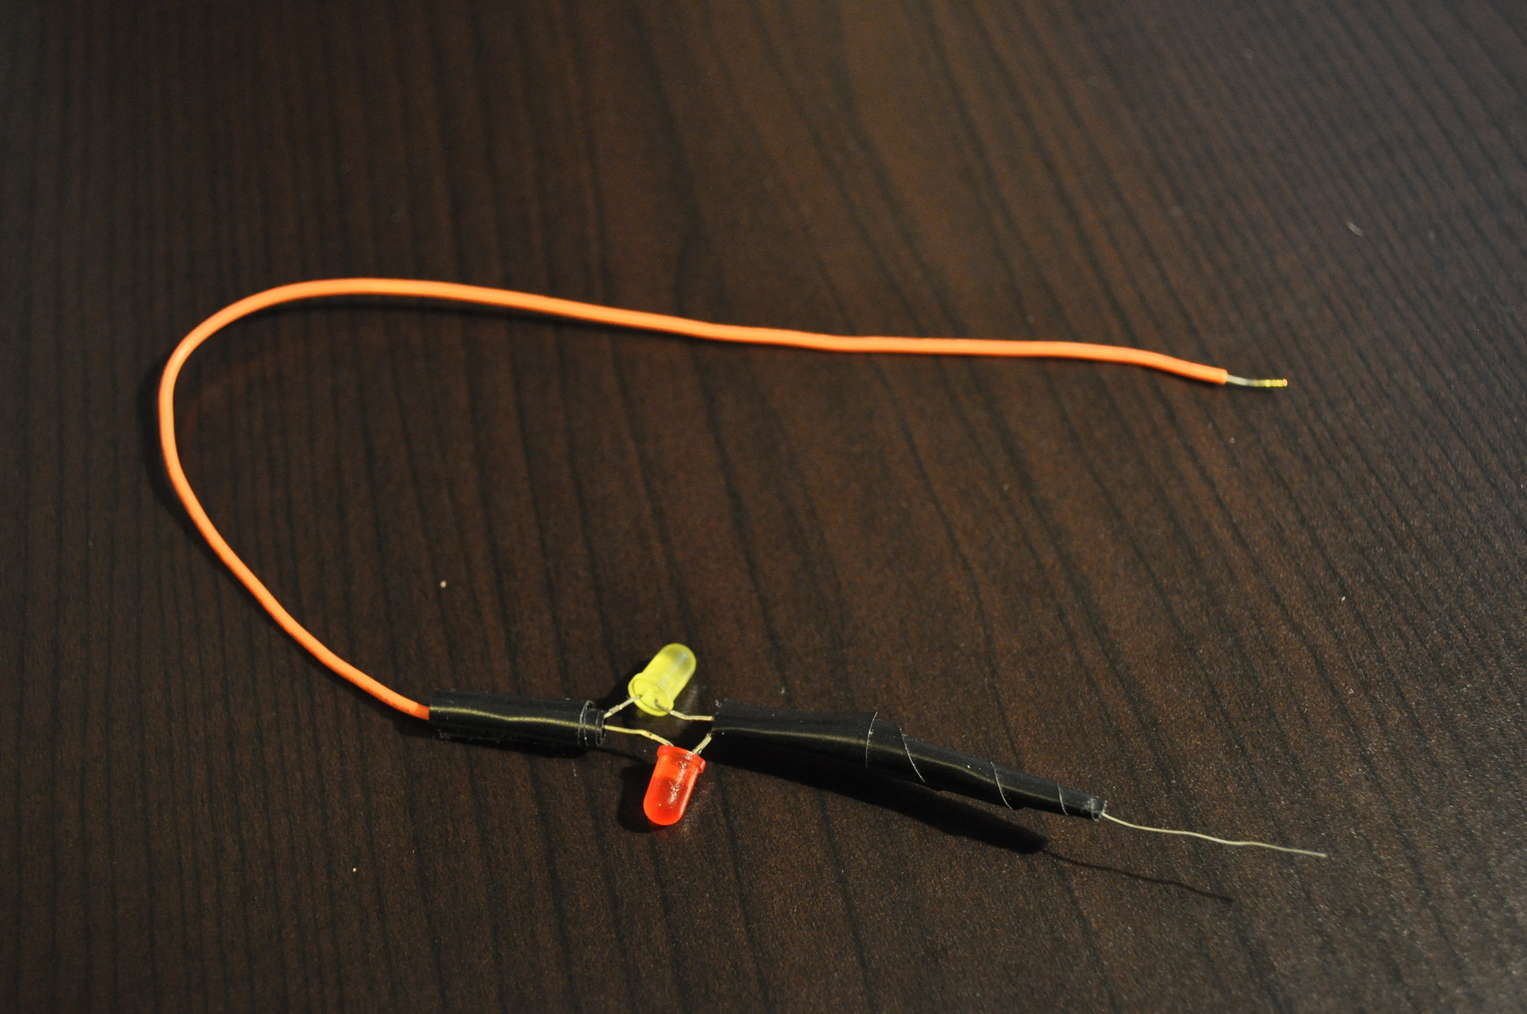 The simple LED logic probe